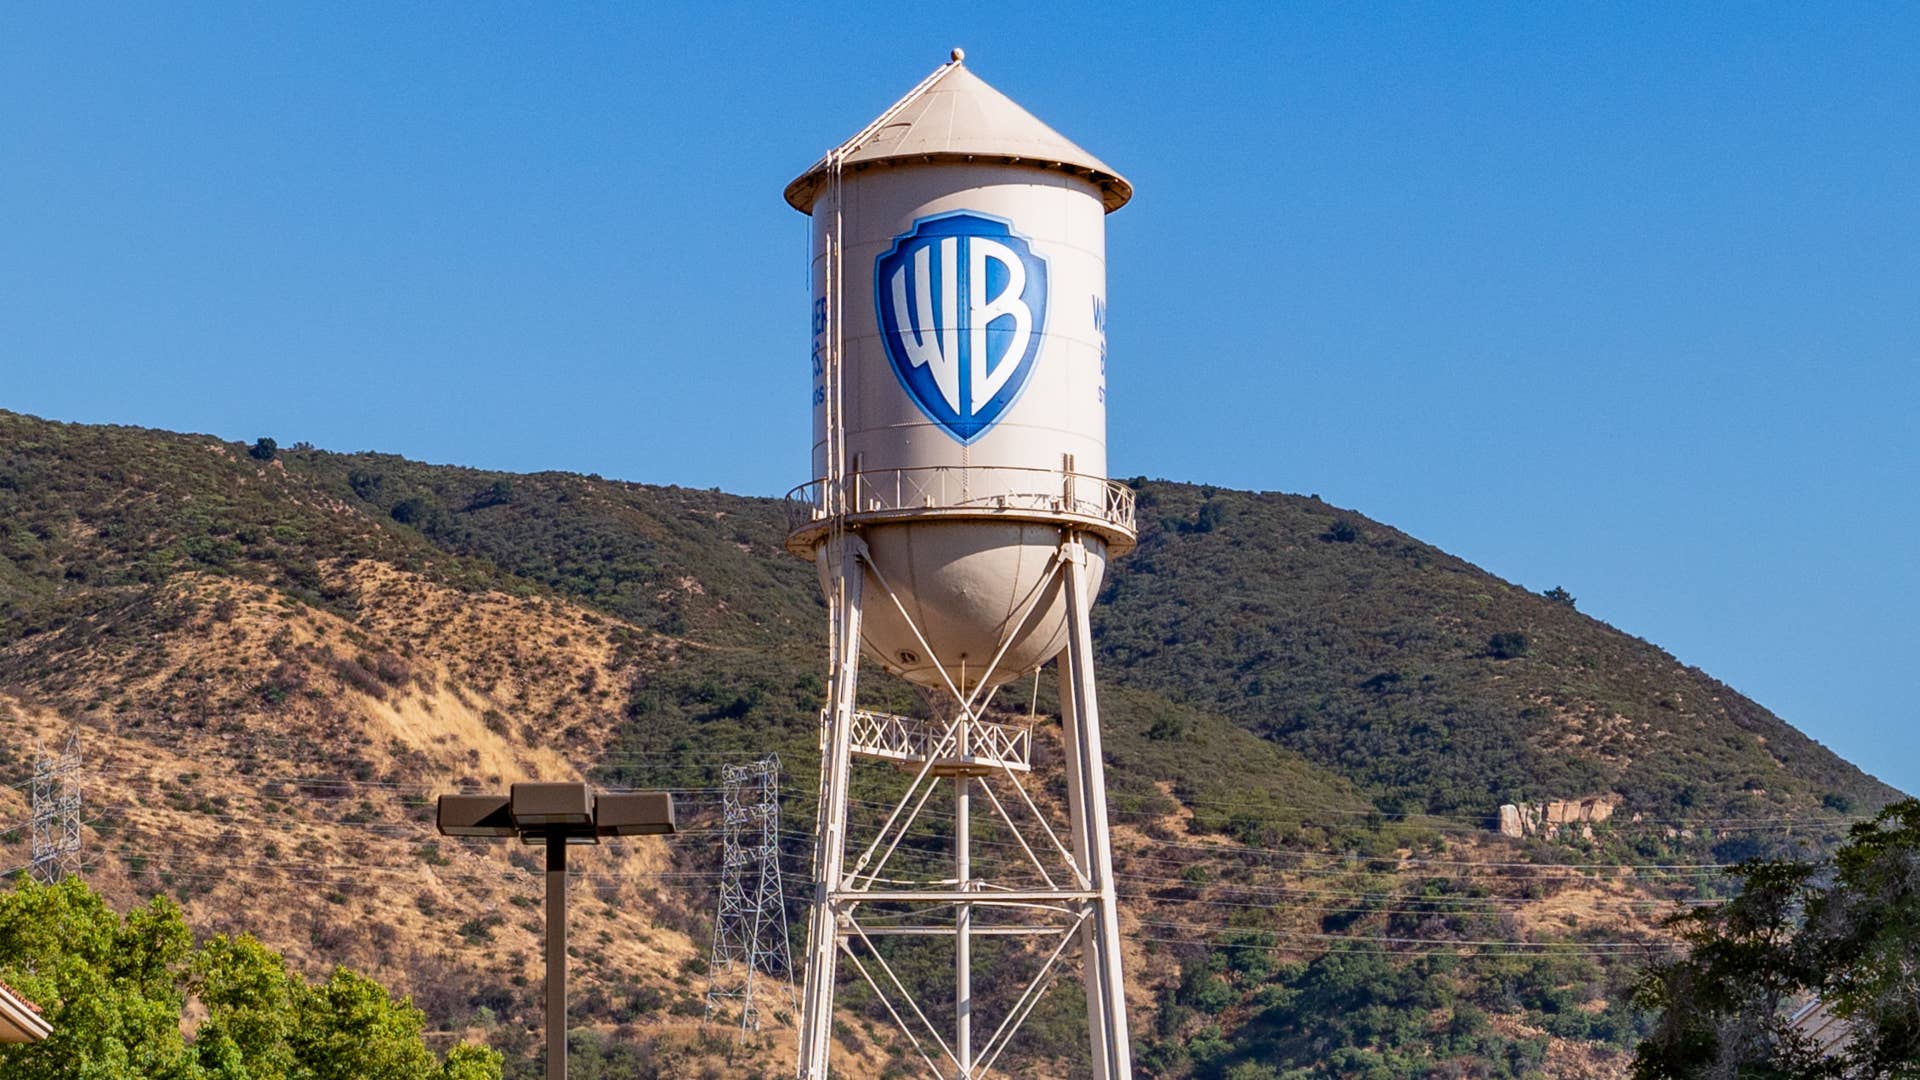 General views of the Warner Brothers film studio lot.